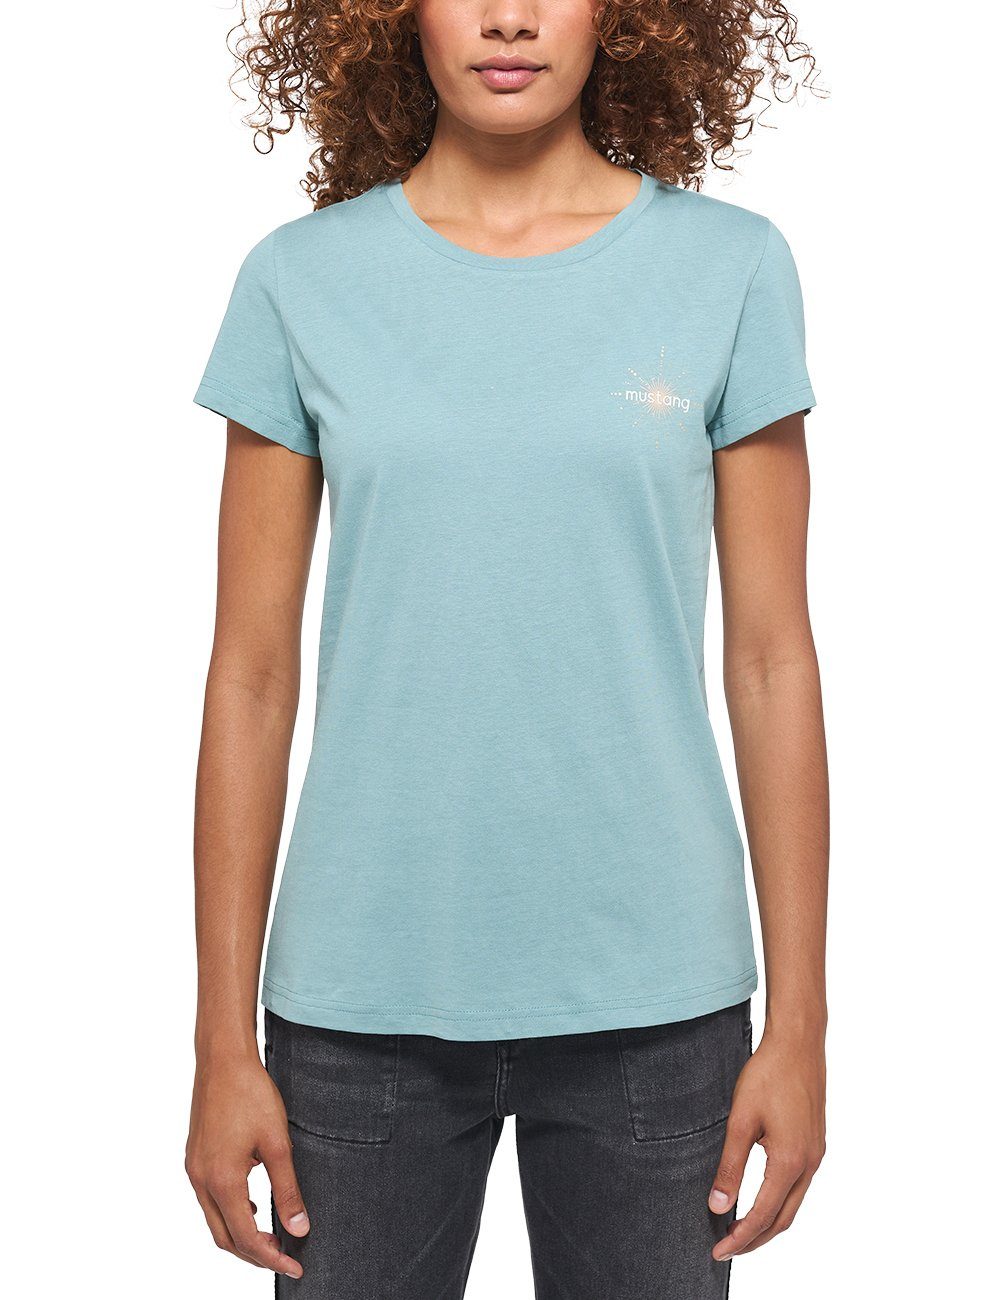 MUSTANG C Alexia Mustang blau Style T-Shirt T-Shirt Chestprint